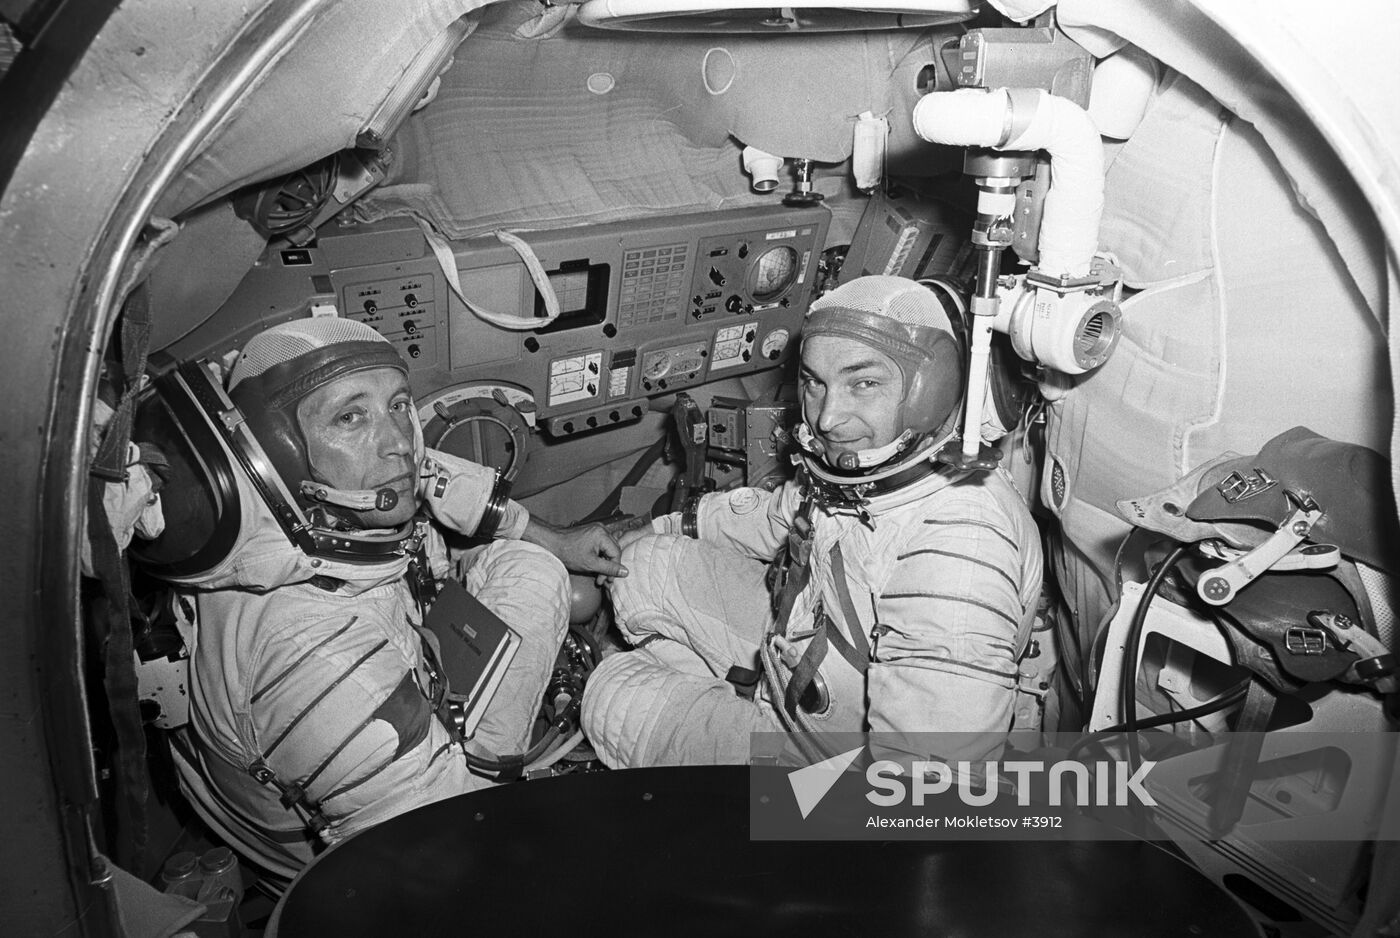 Cosmonauts Bykovsky and Aksyonov